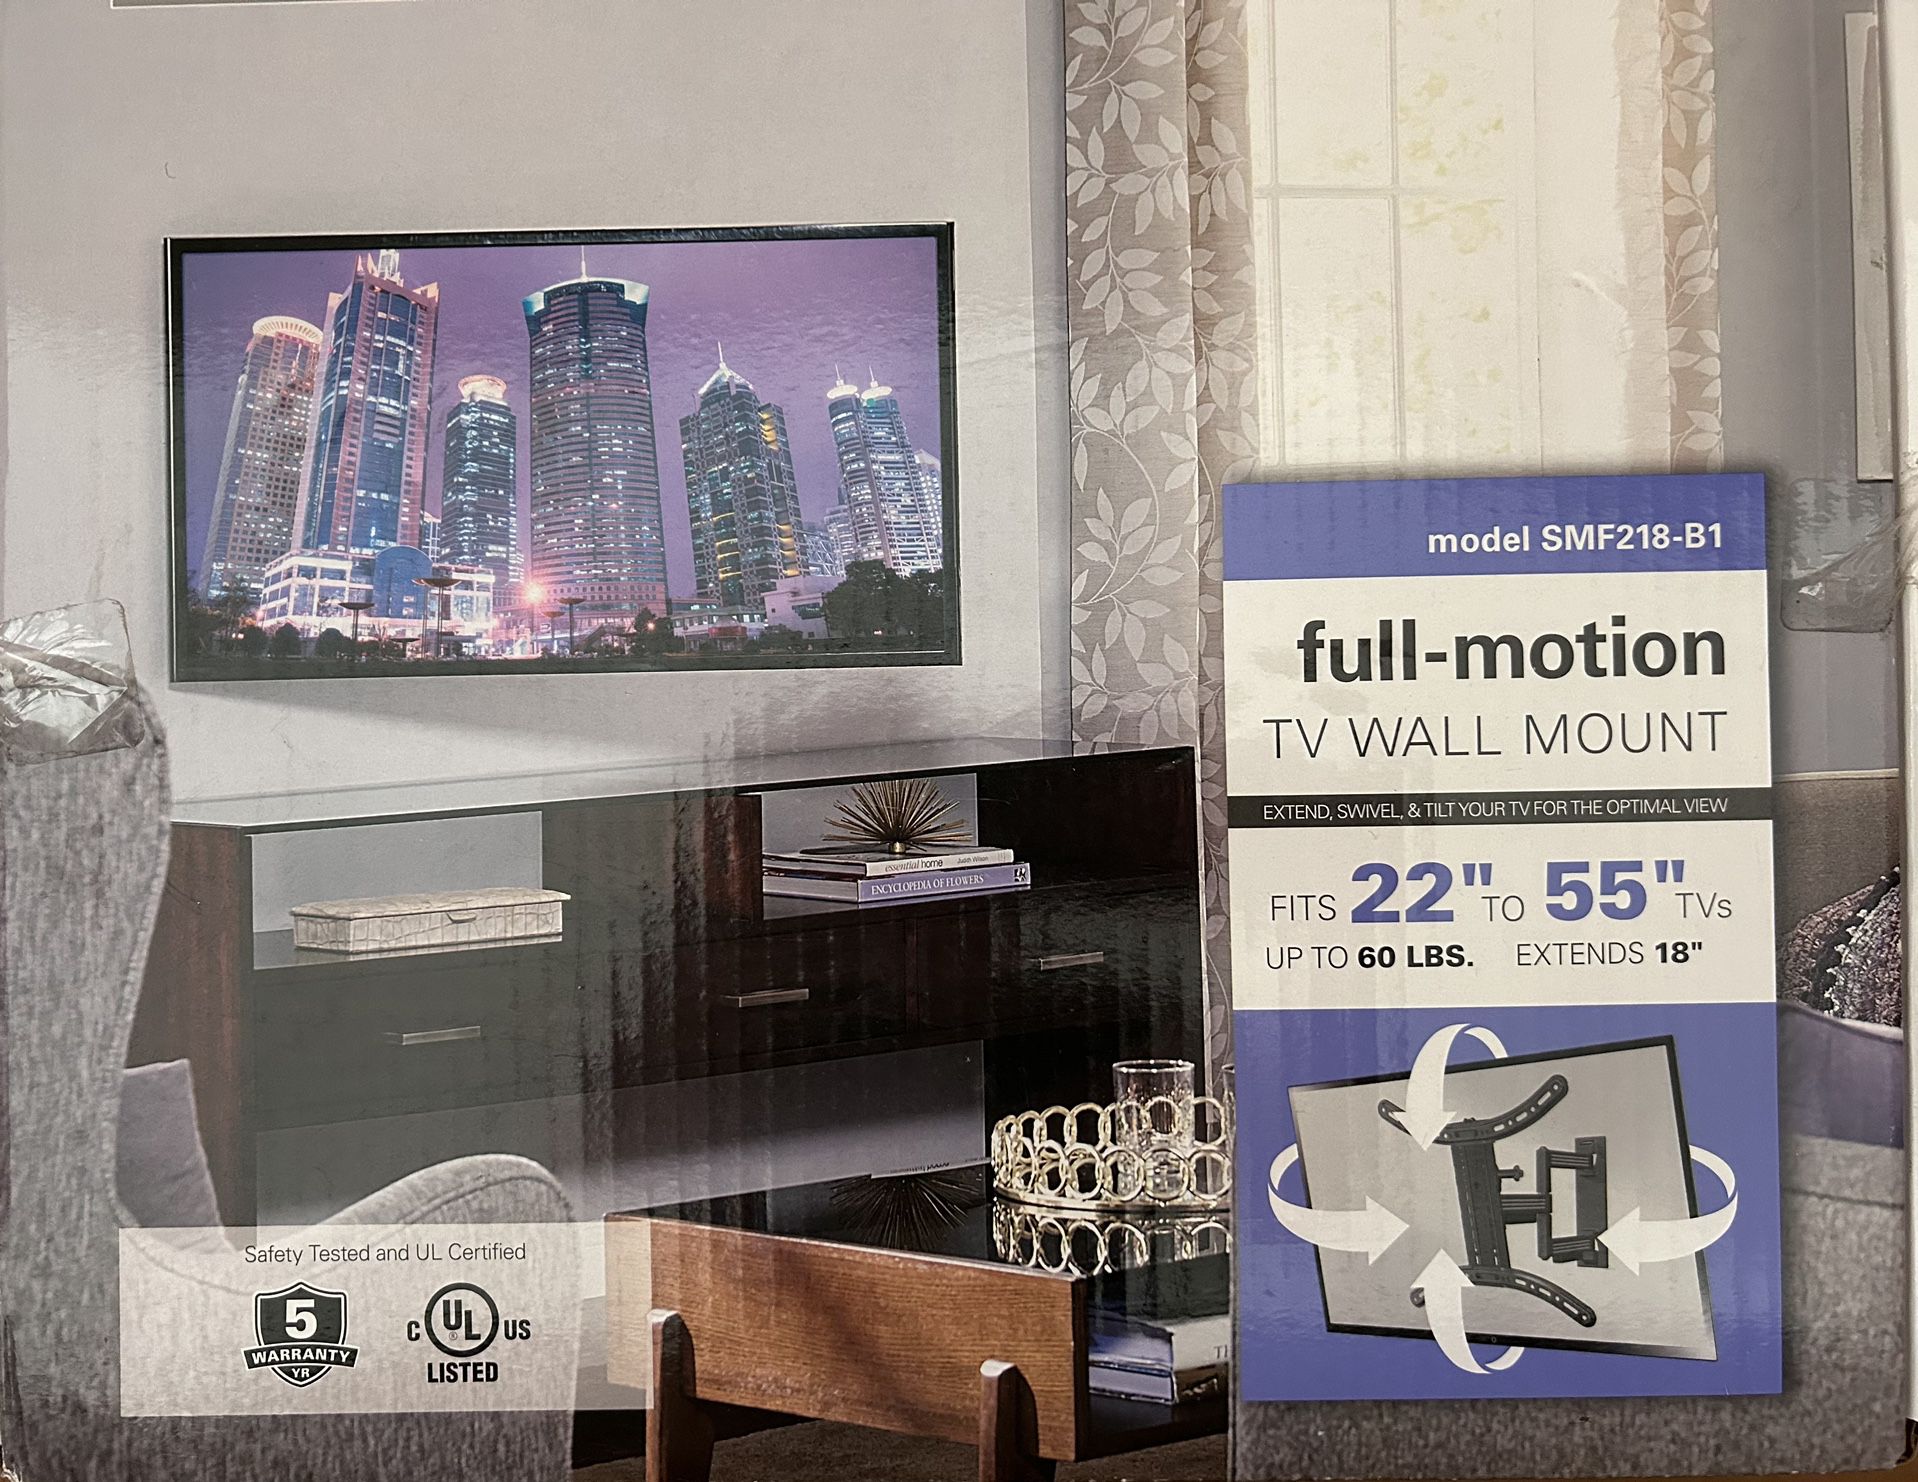 Full-motion TV wall Mount